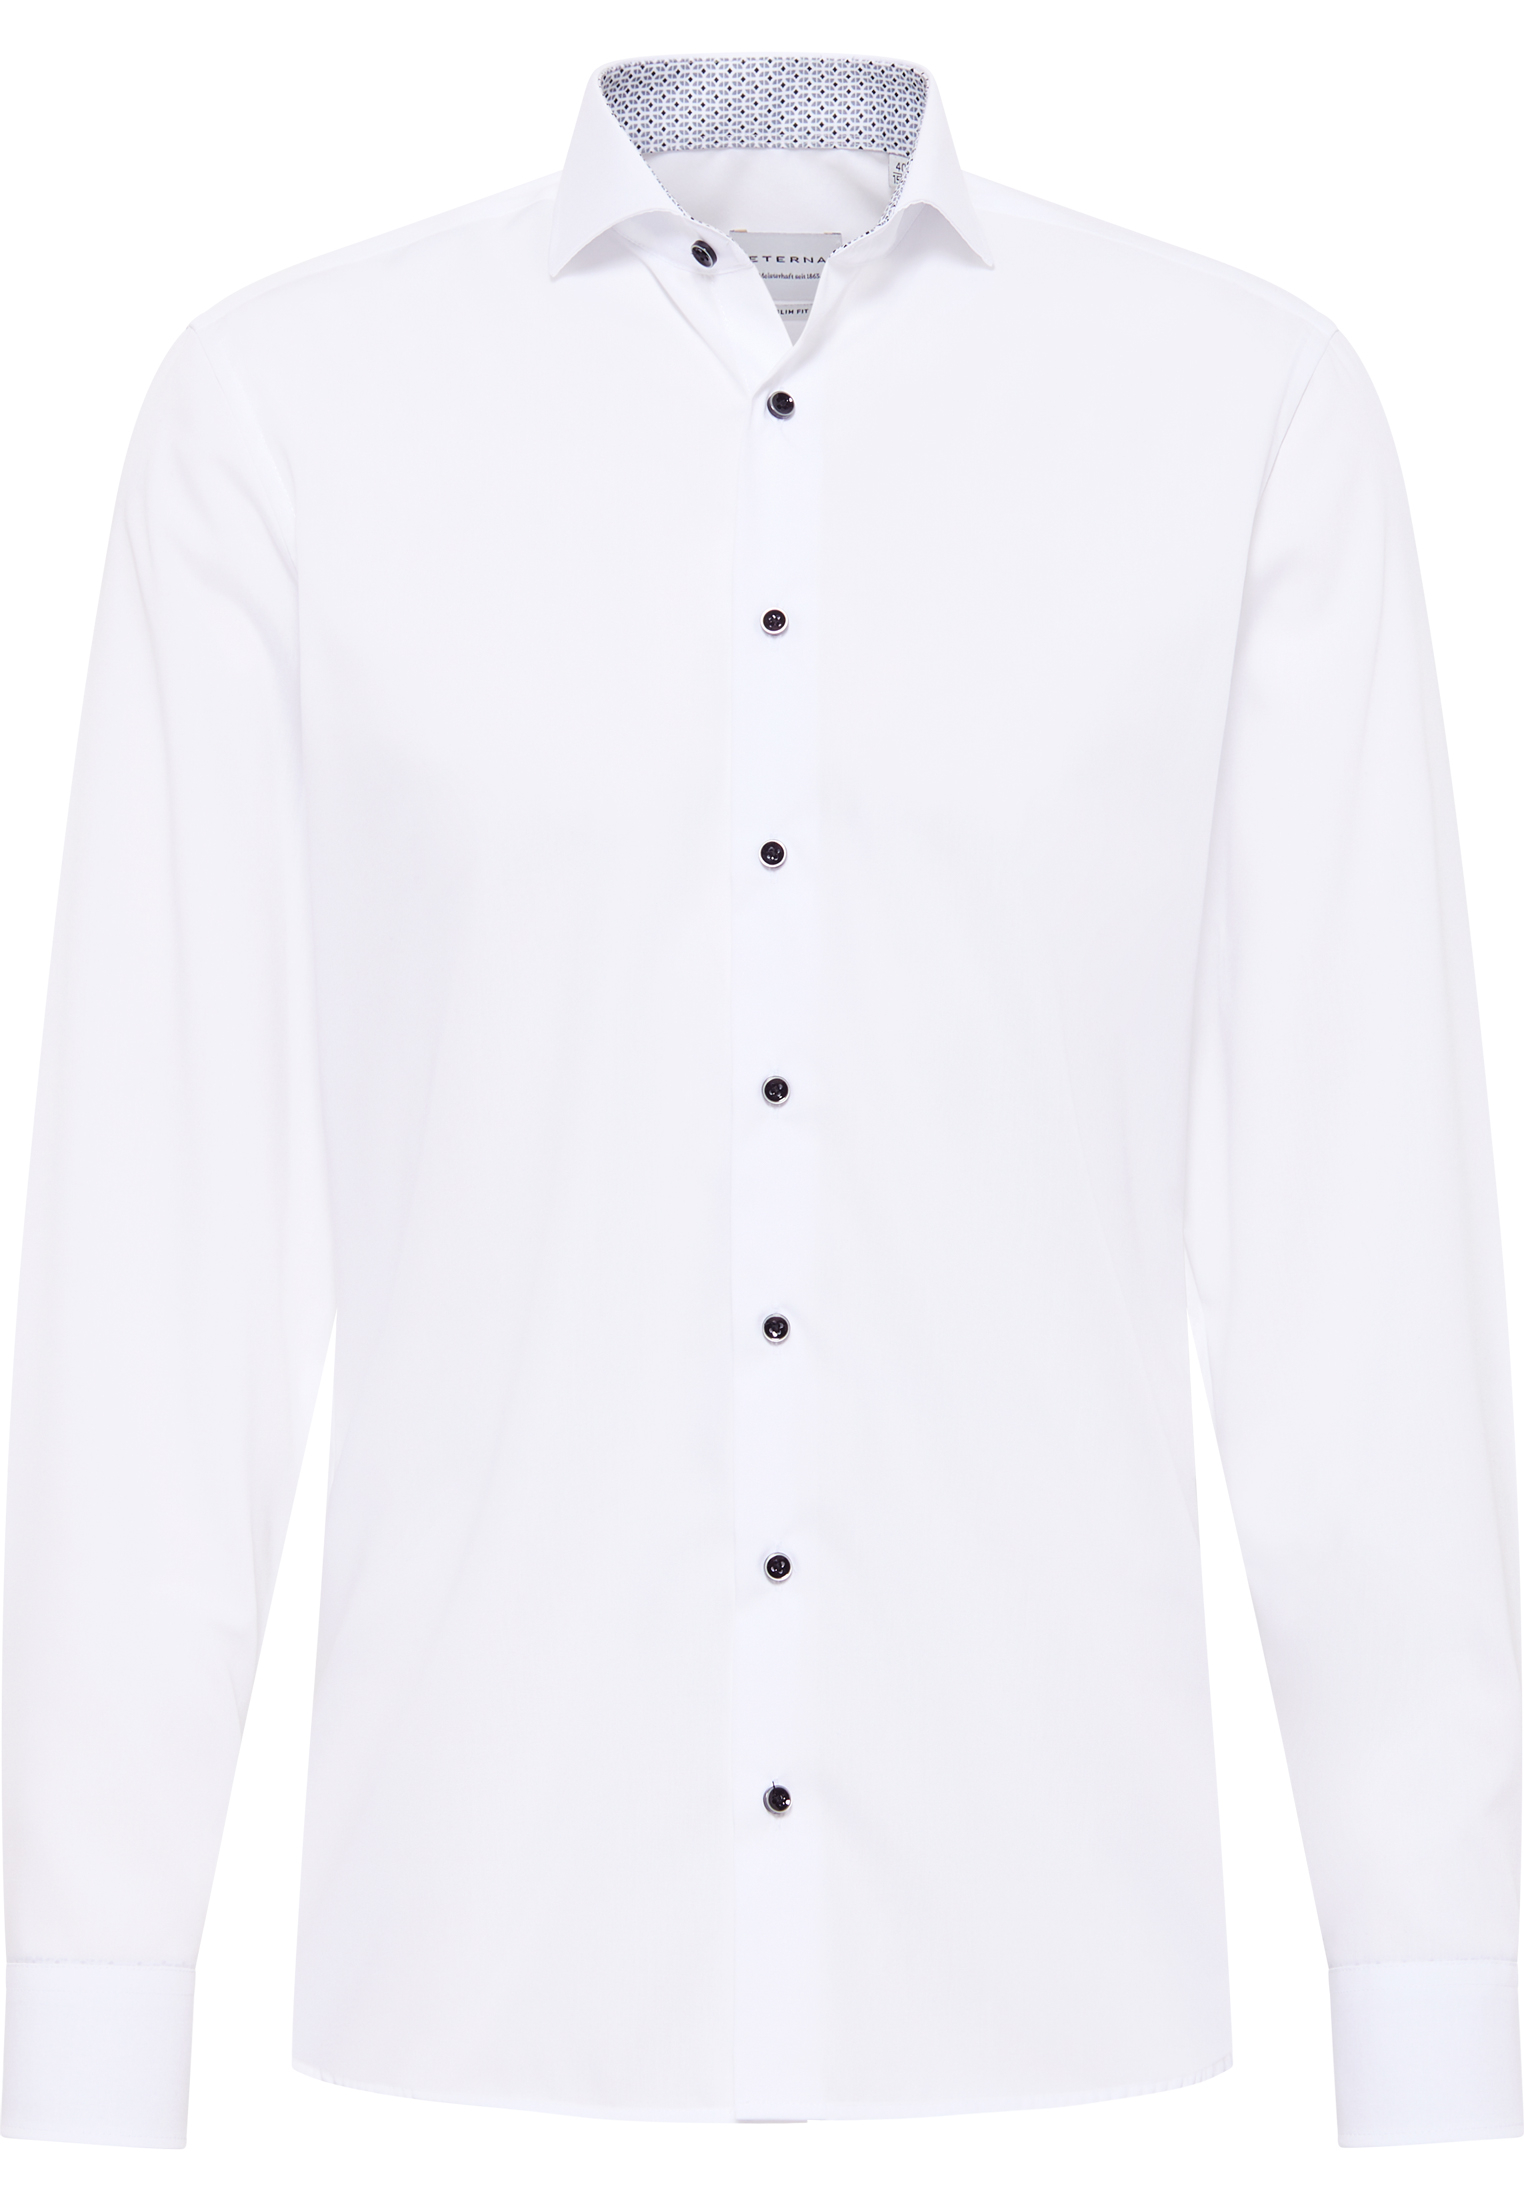 SLIM FIT Original Shirt blanc uni